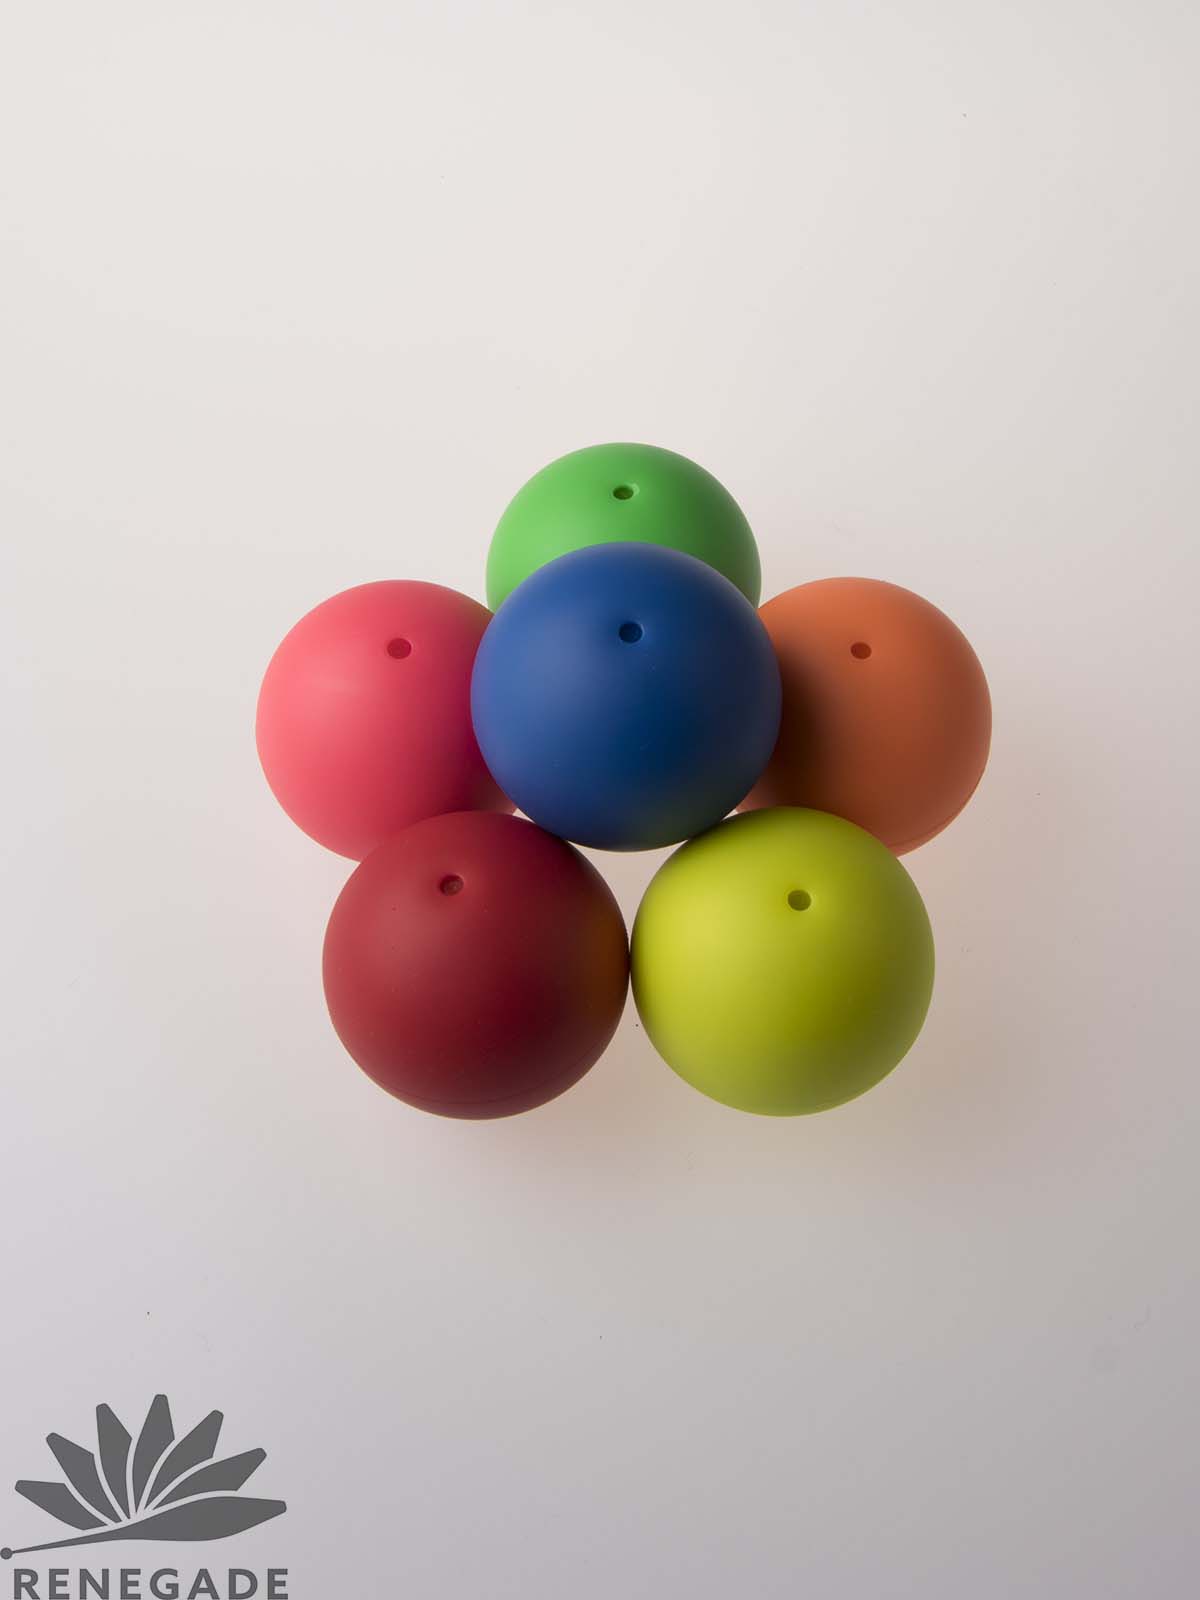 62mm Ø ✓ juggling-ball filling made bird millet ✓ water-repellent ✓ robust artificial leather I juggling-set for juggling for children & beginners Set of 5 Diabolo Premium juggling balls